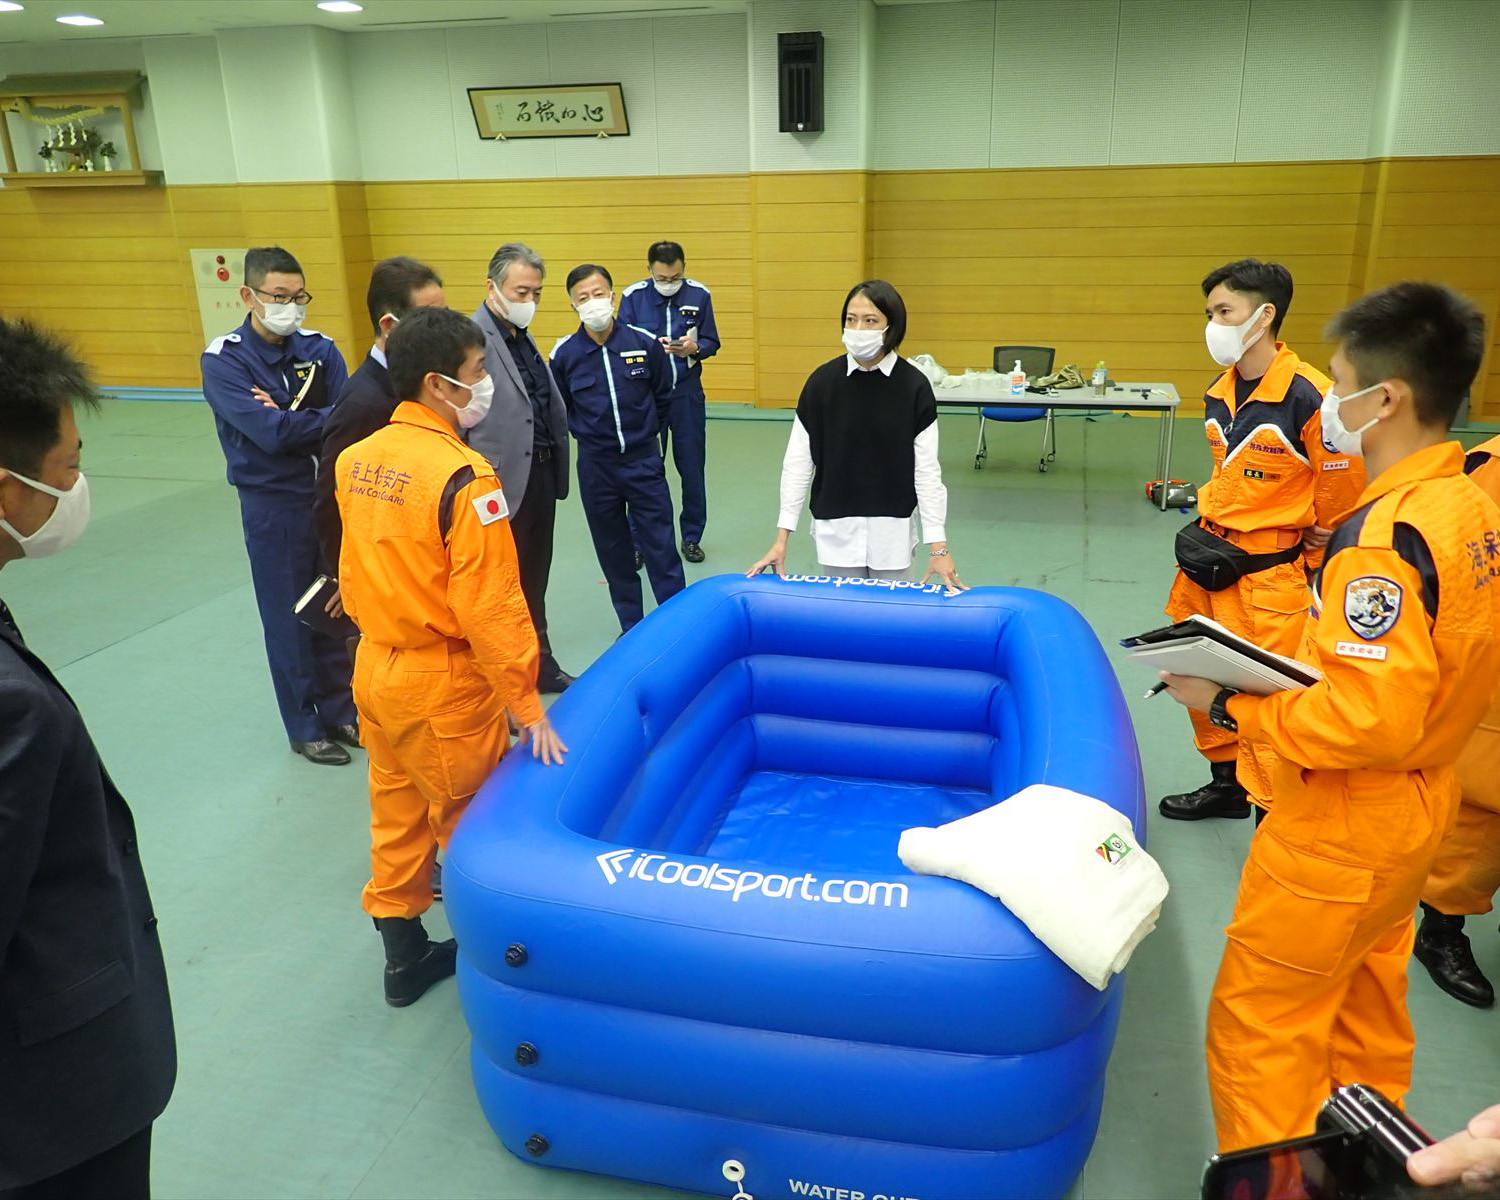 Hosokawa sharing her exertional heat stroke expertise with students at Japan’s Waseda University, members of the Japan Coast Guard